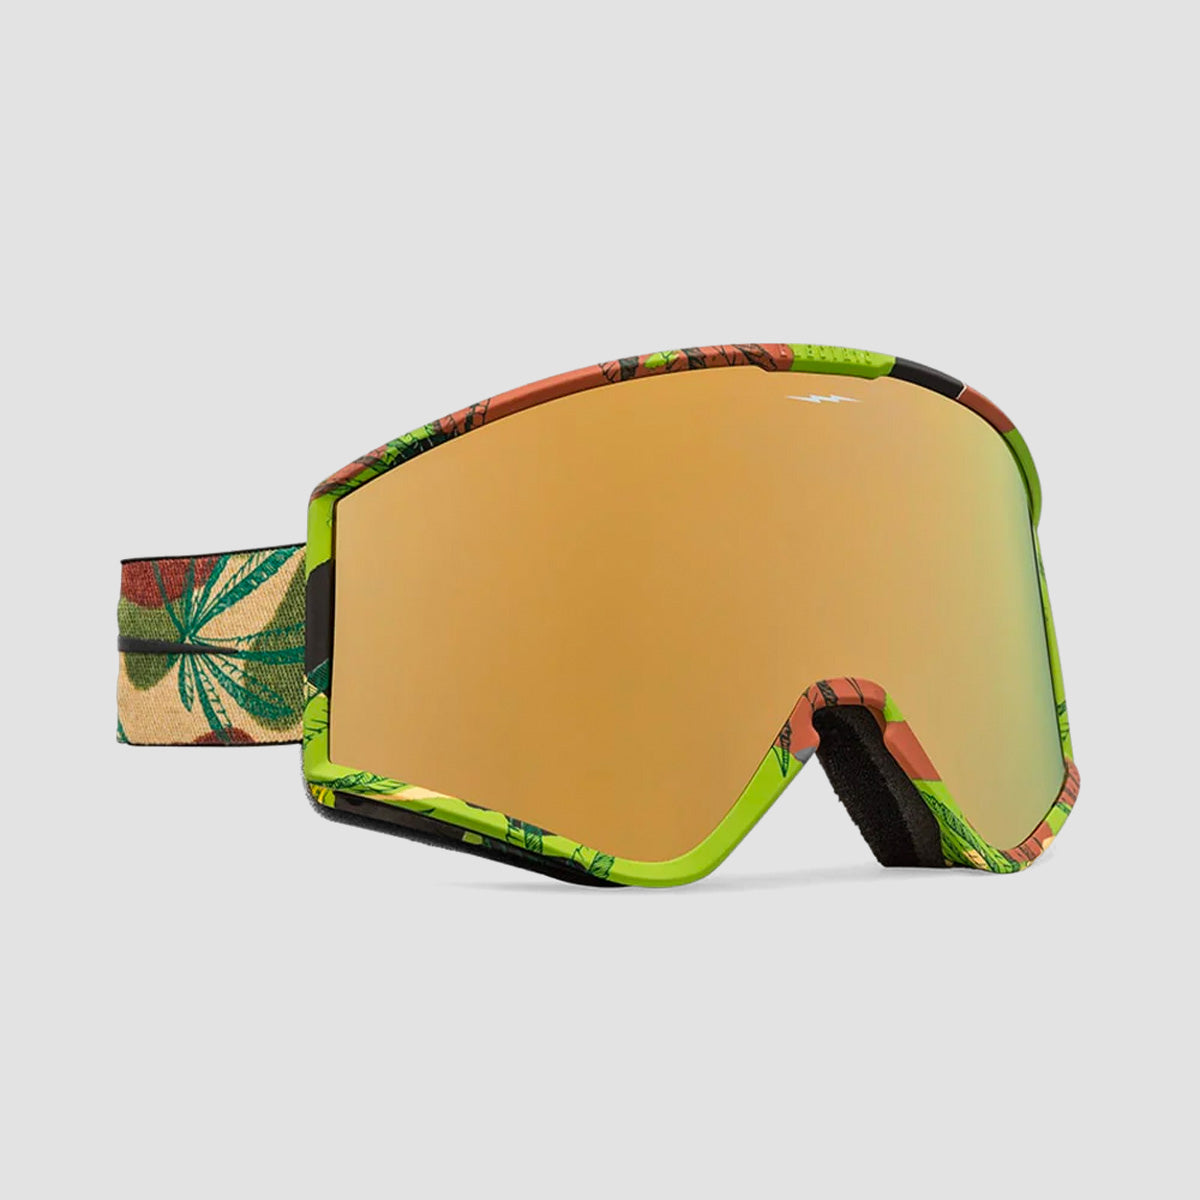 Electric Kleveland Snow Goggles Matte Camobis/Gold Chrome With Bonus Lense